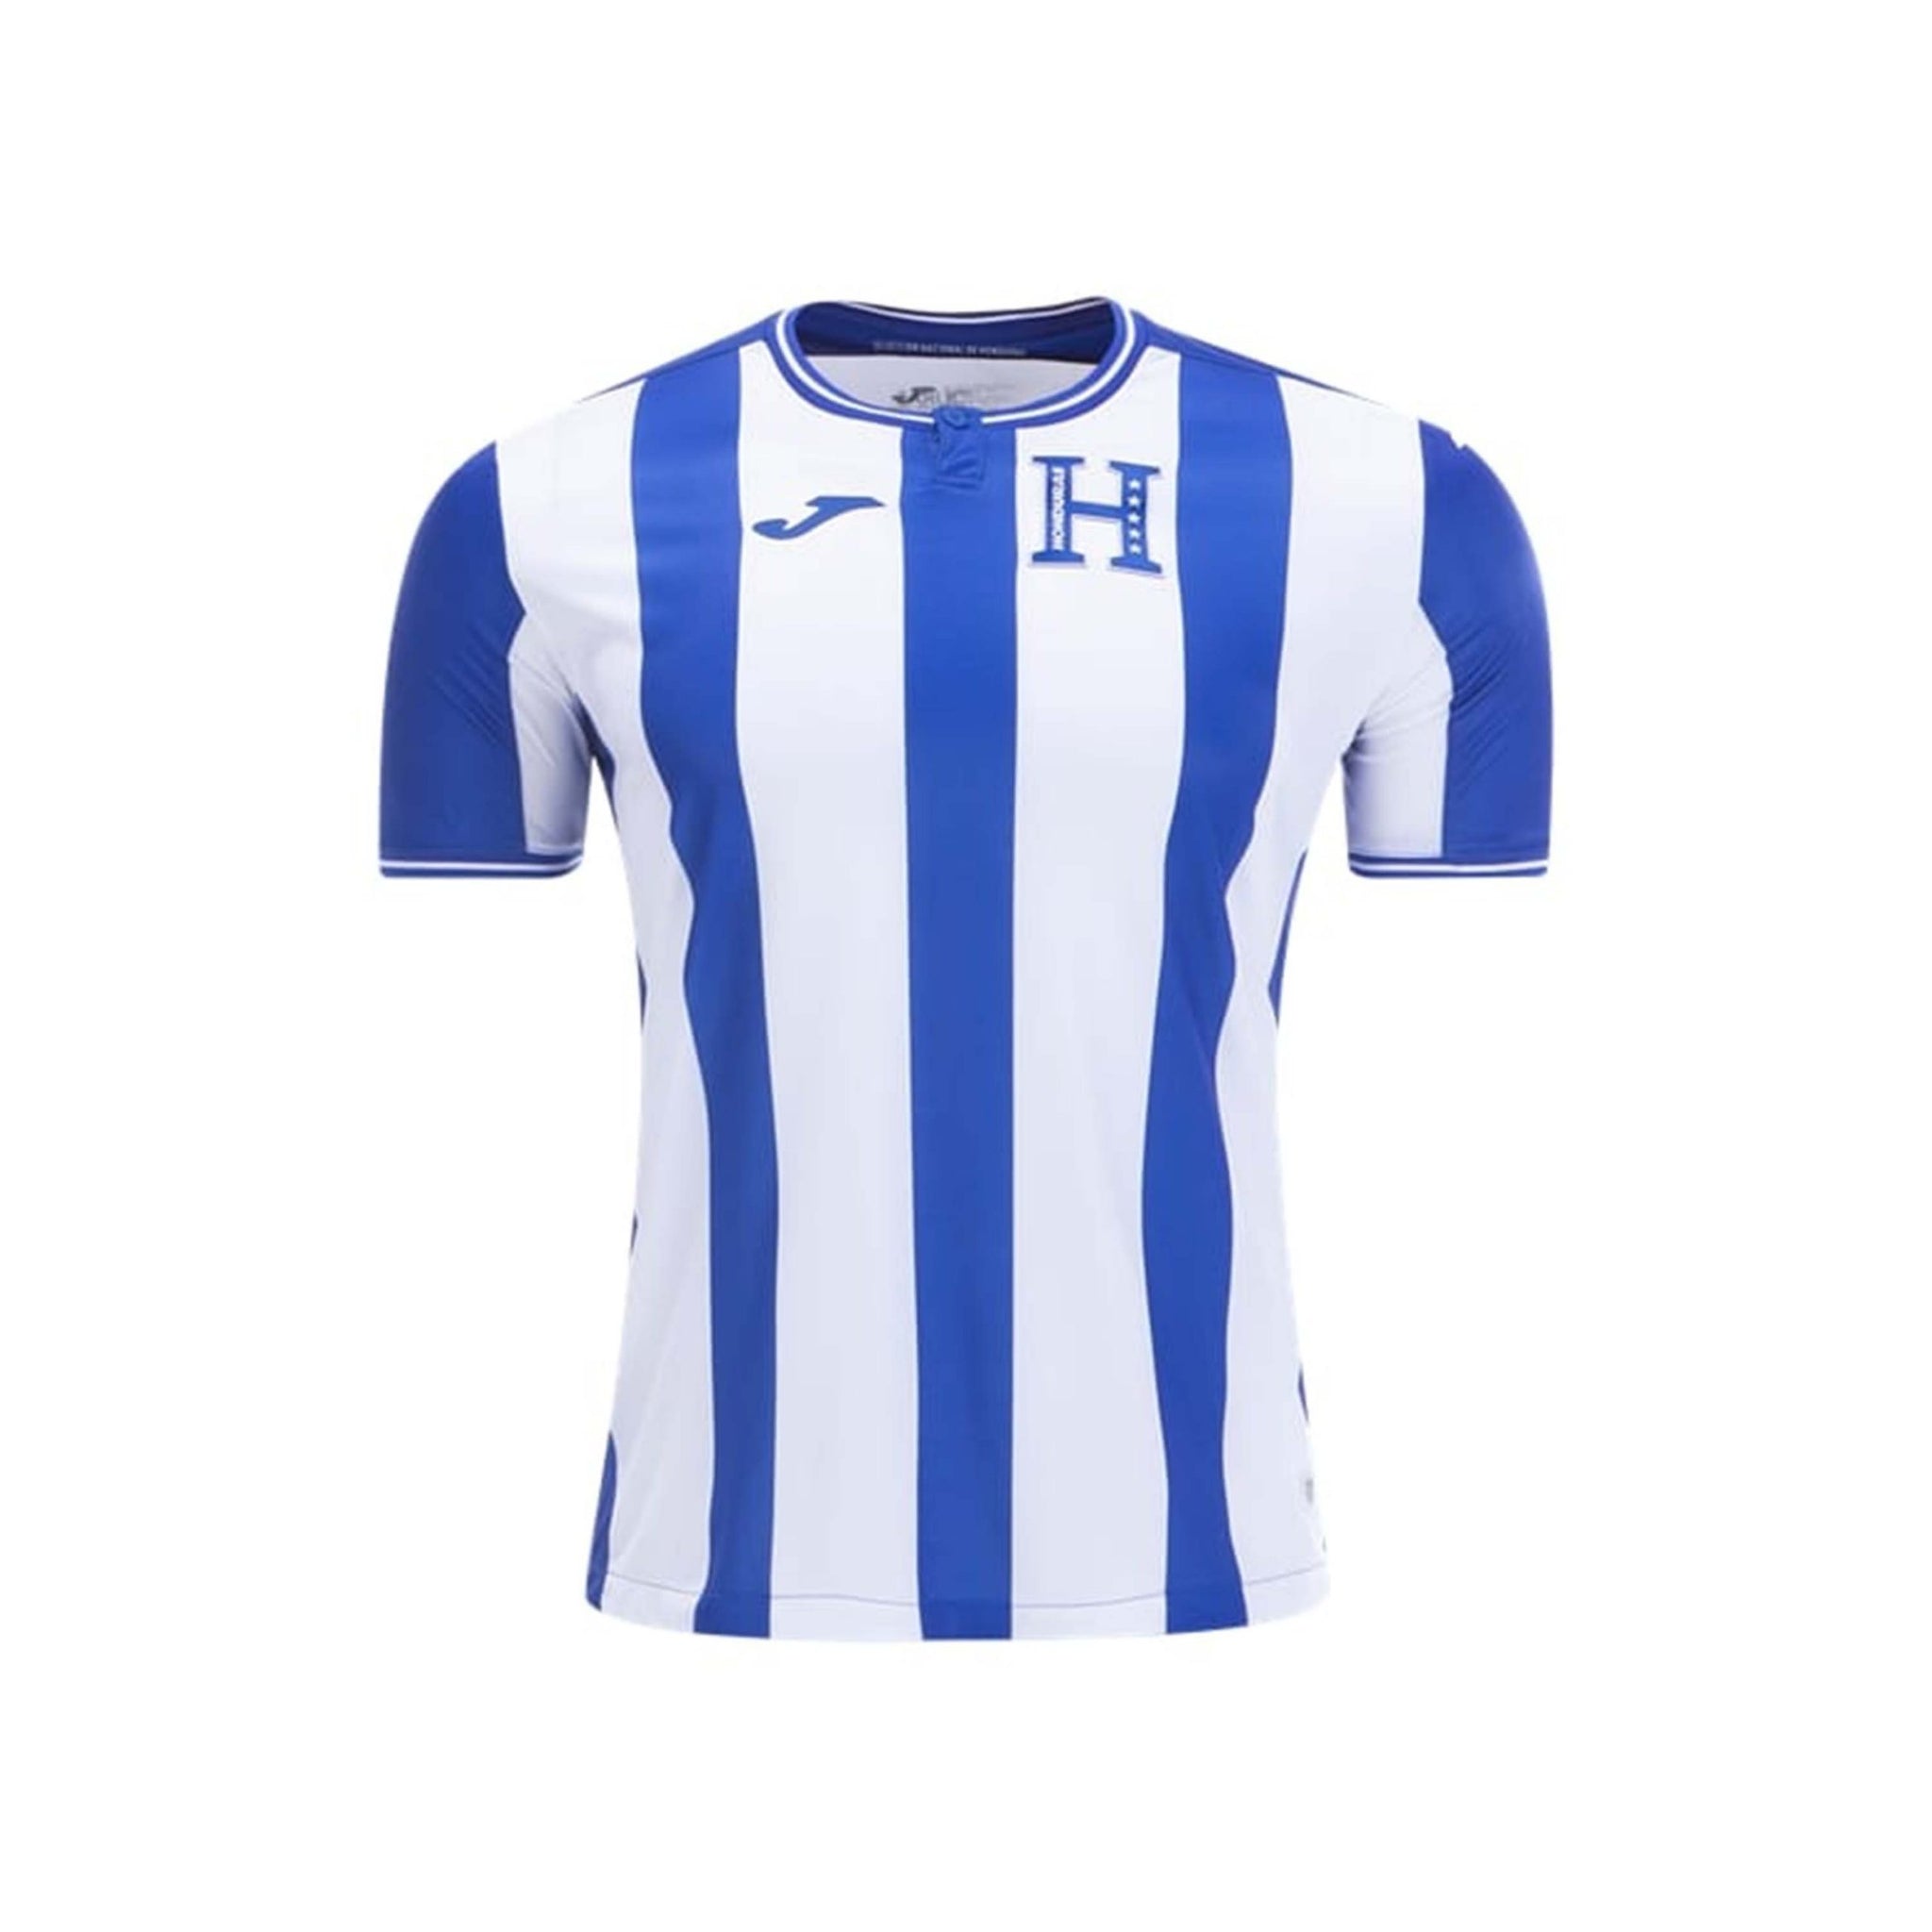 Honduras soccer shirt